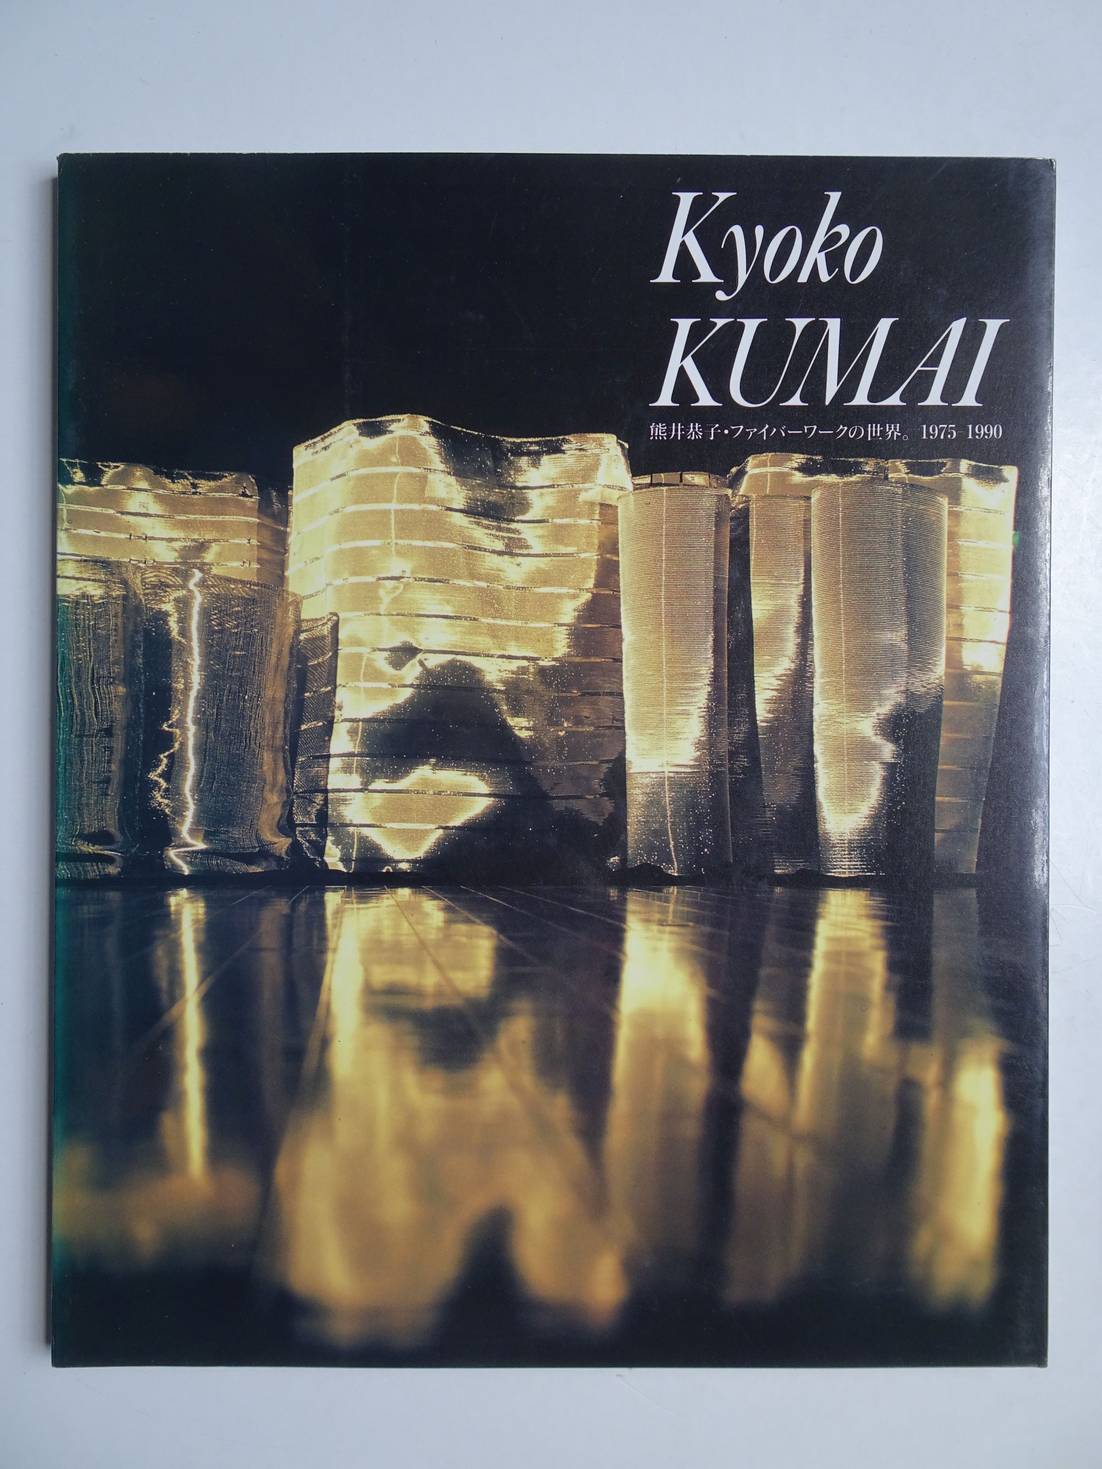 Kumai, Kyoko (ed.). - Kyoko Kumai Fiber Works 1975-1990.